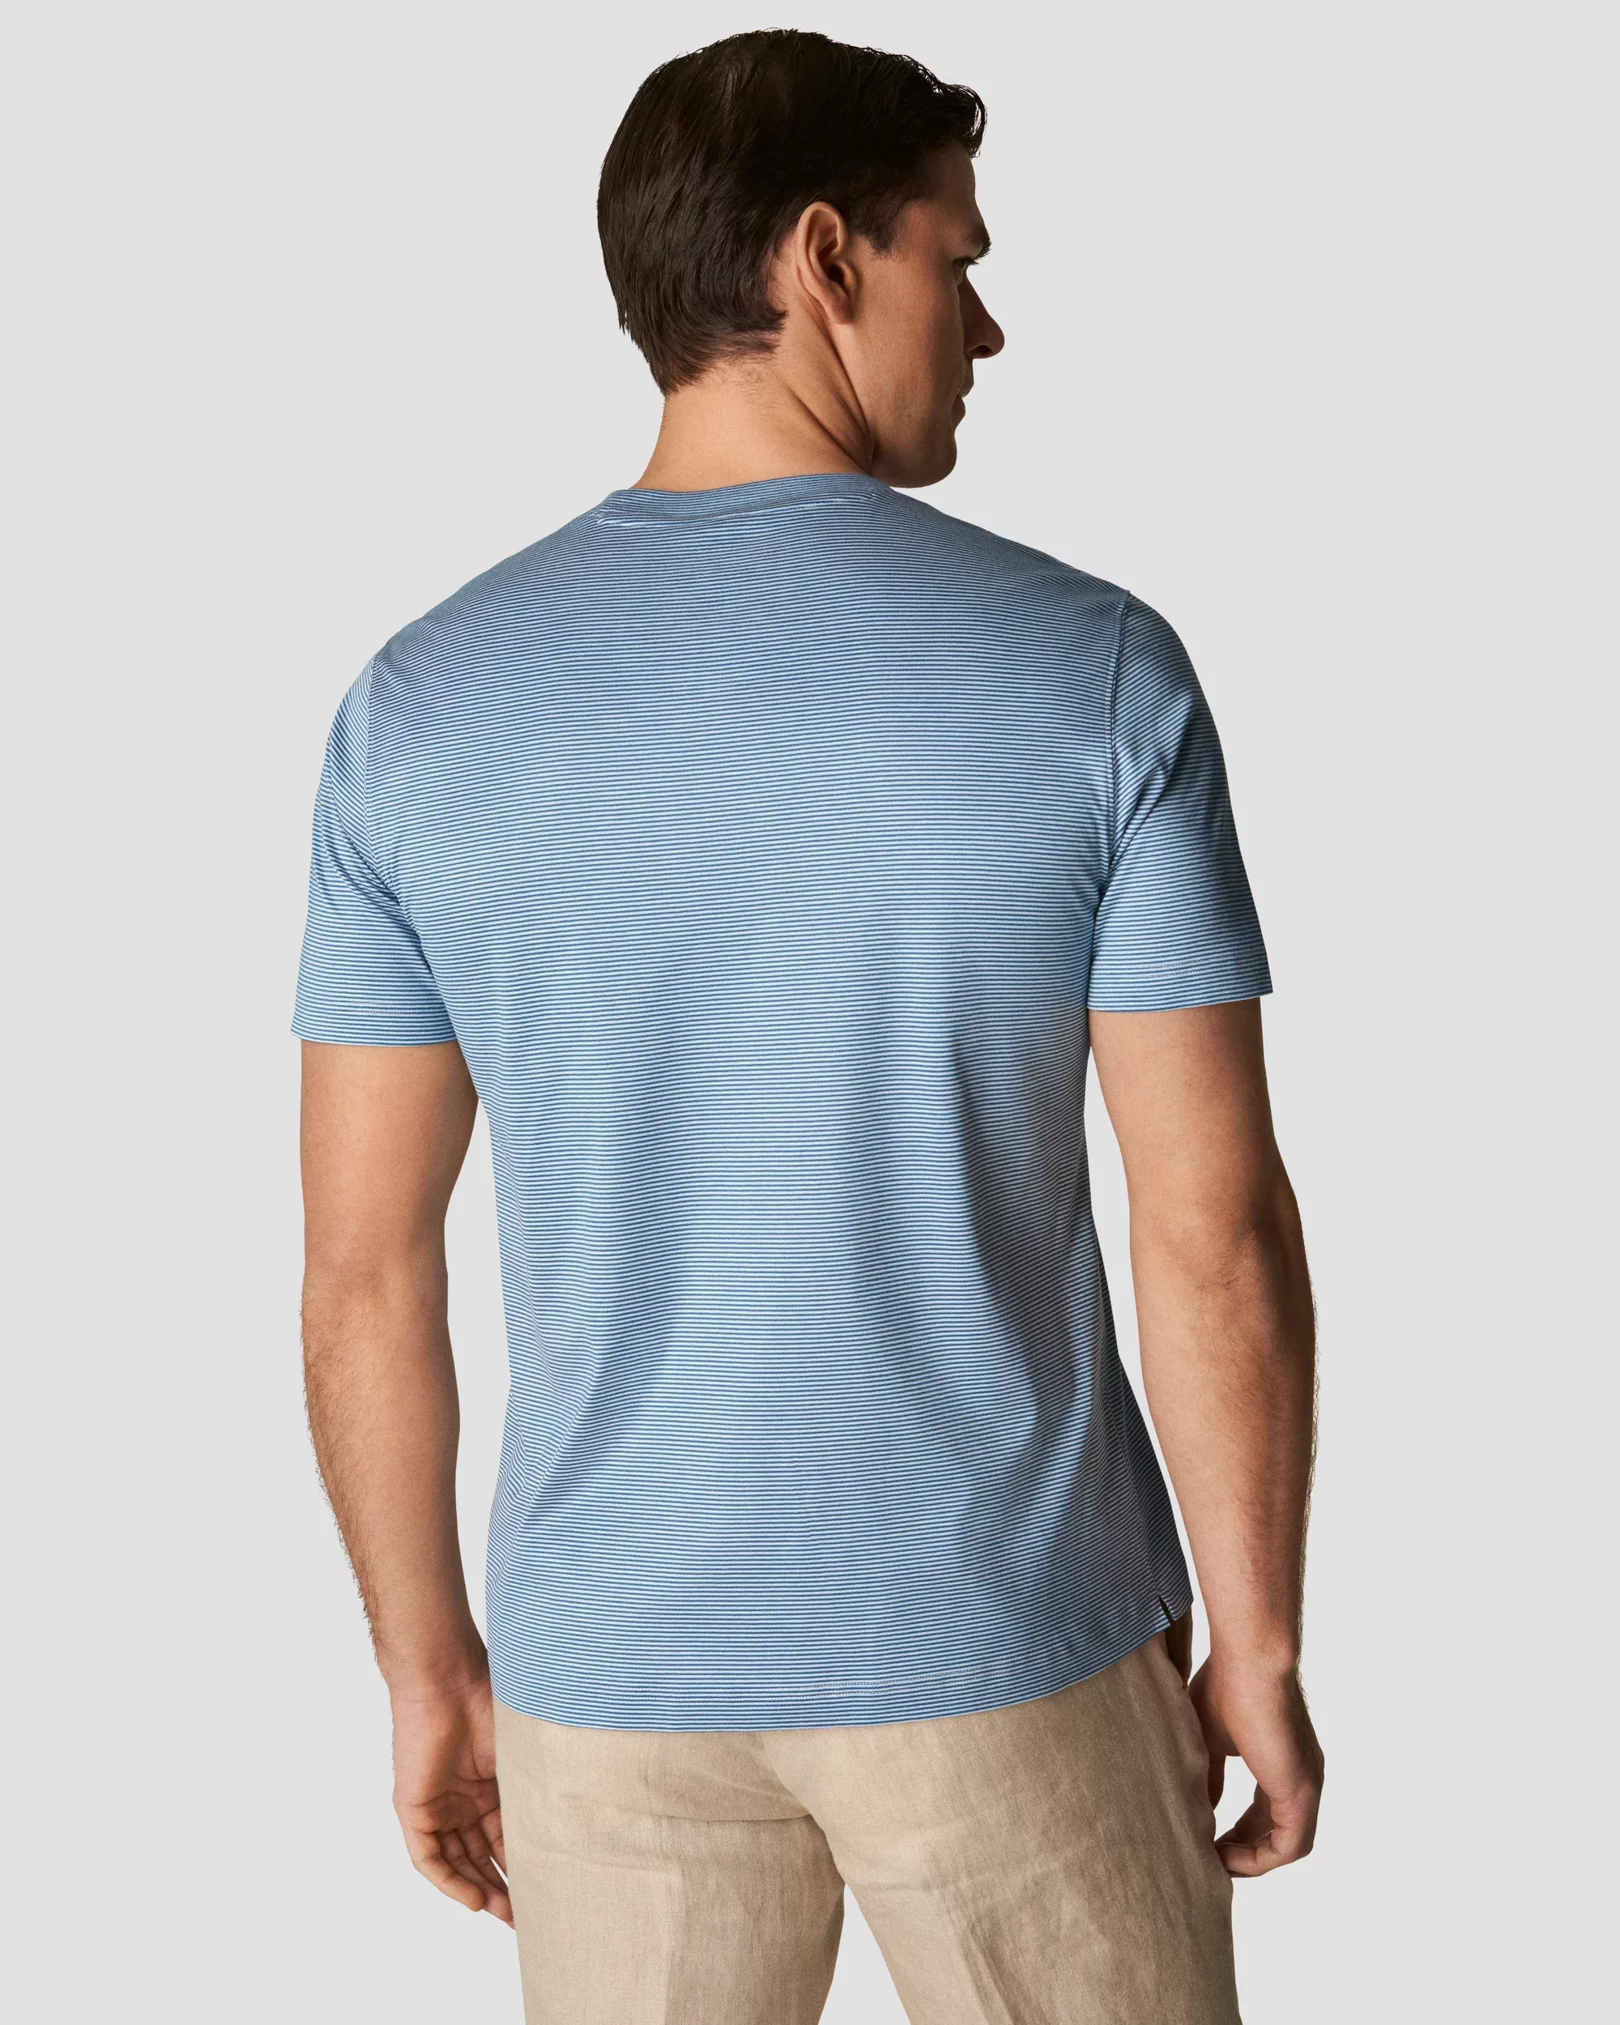 Eton - mid blue interlock t shirt